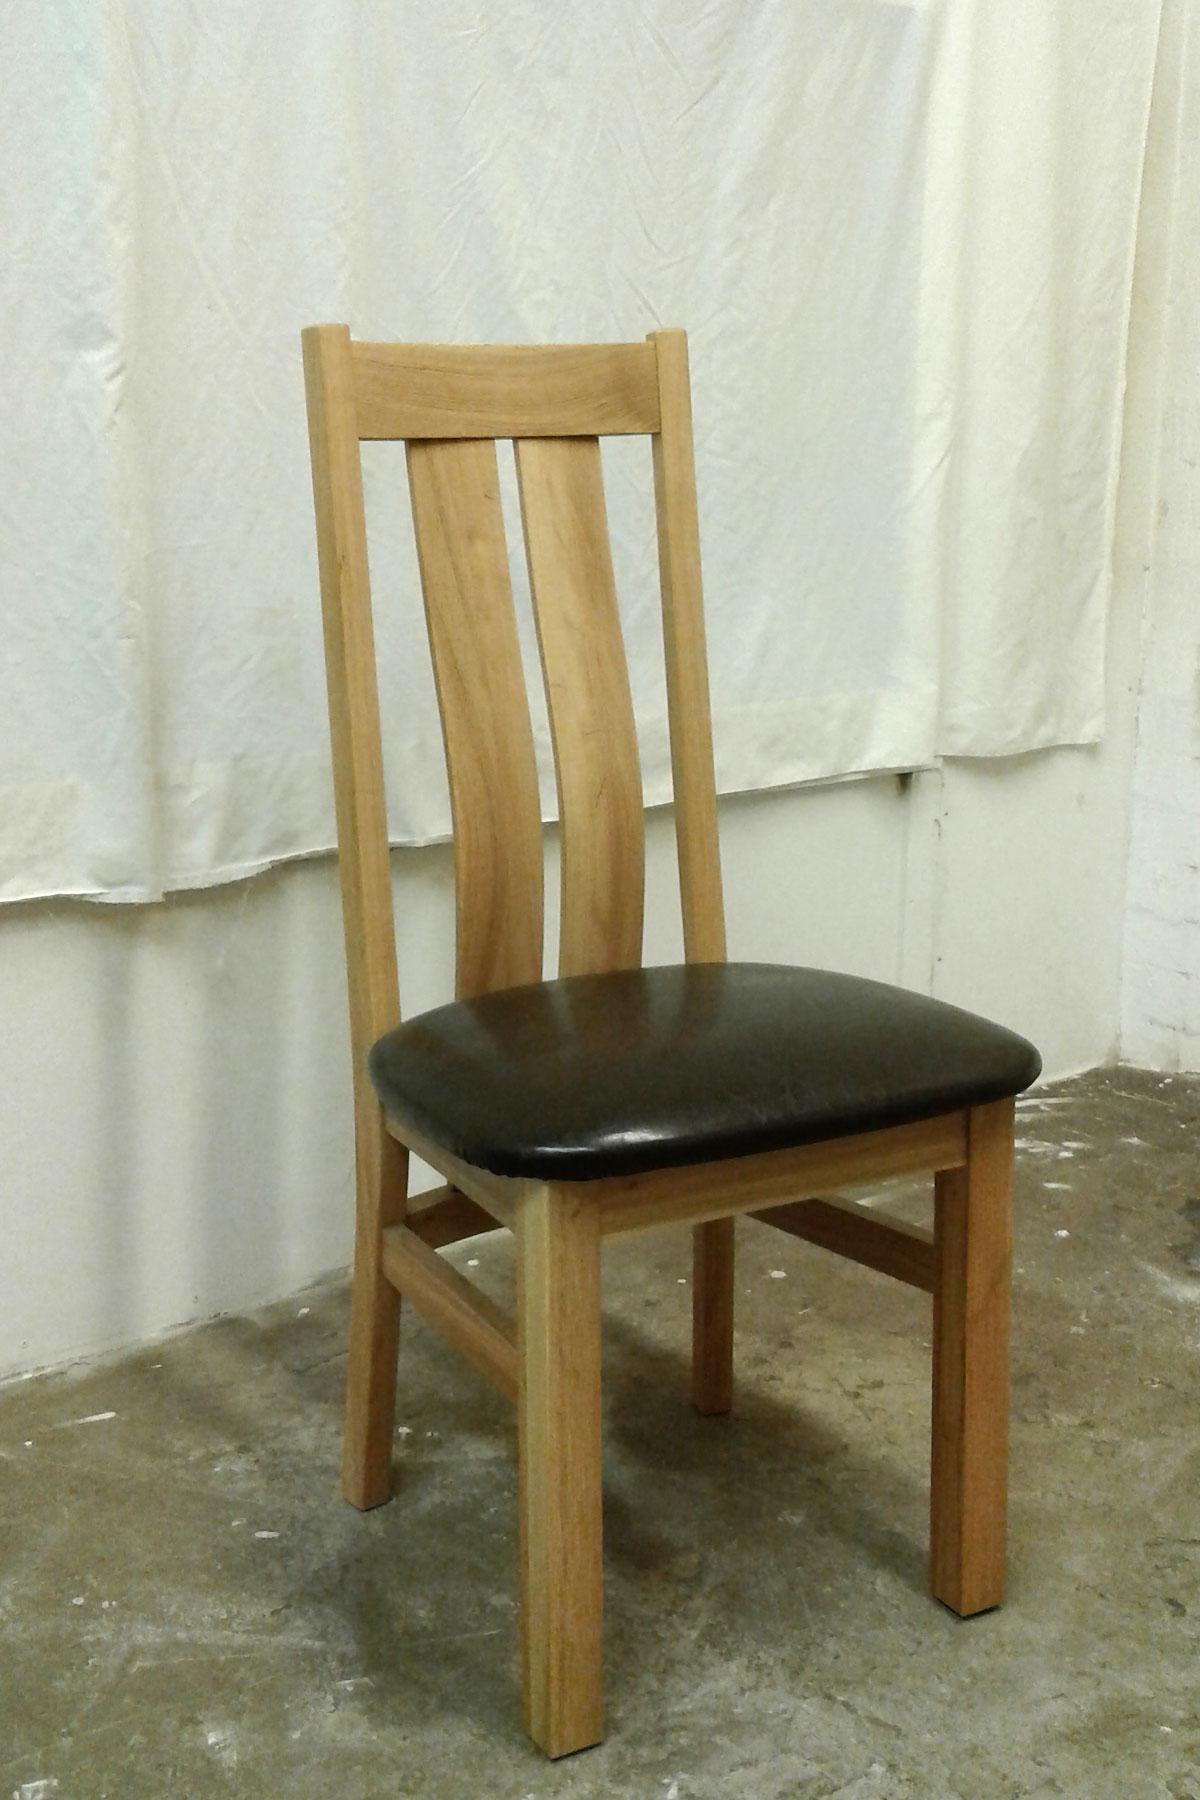 Oak chairs for sale in North Devon